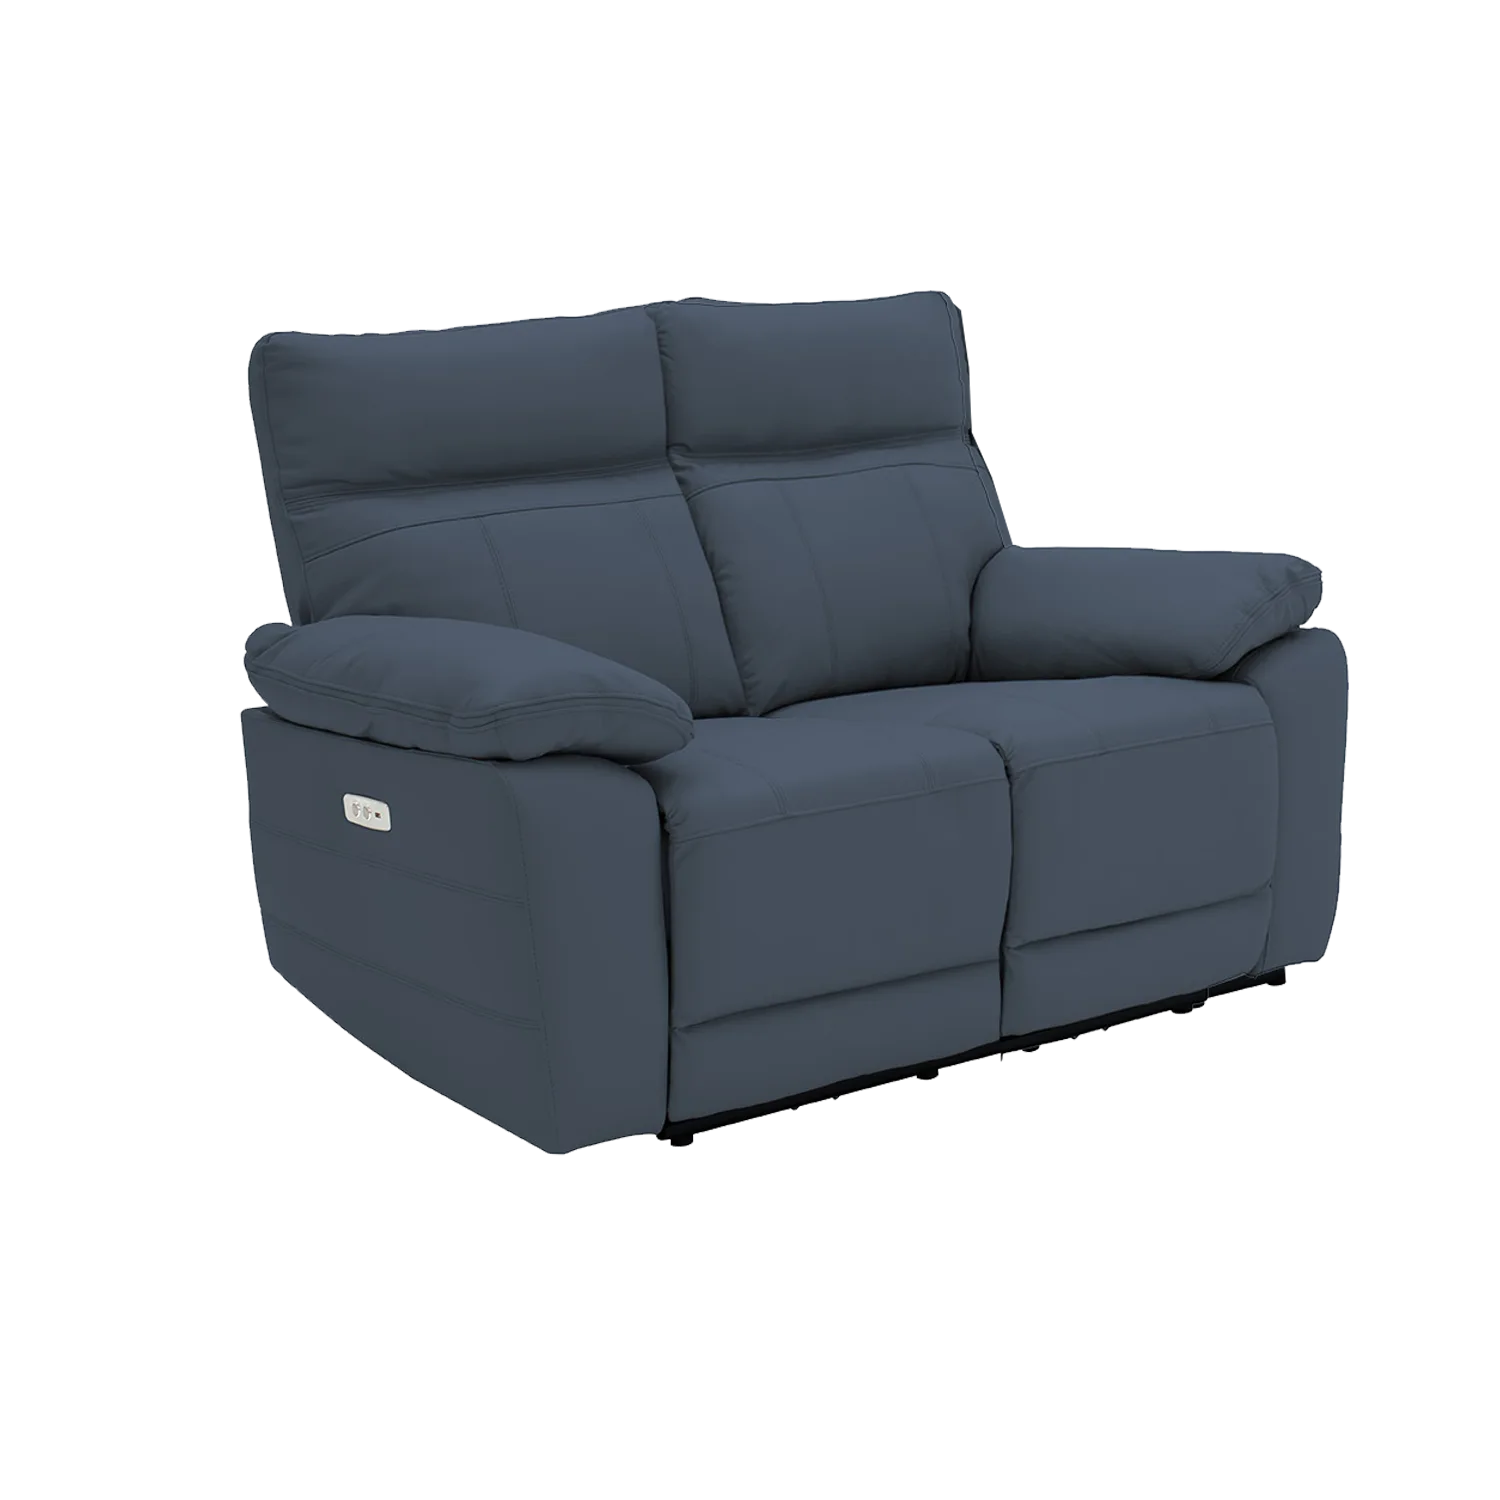 Positano Indigo Leather 2 Seater Electric Recliner Sofa